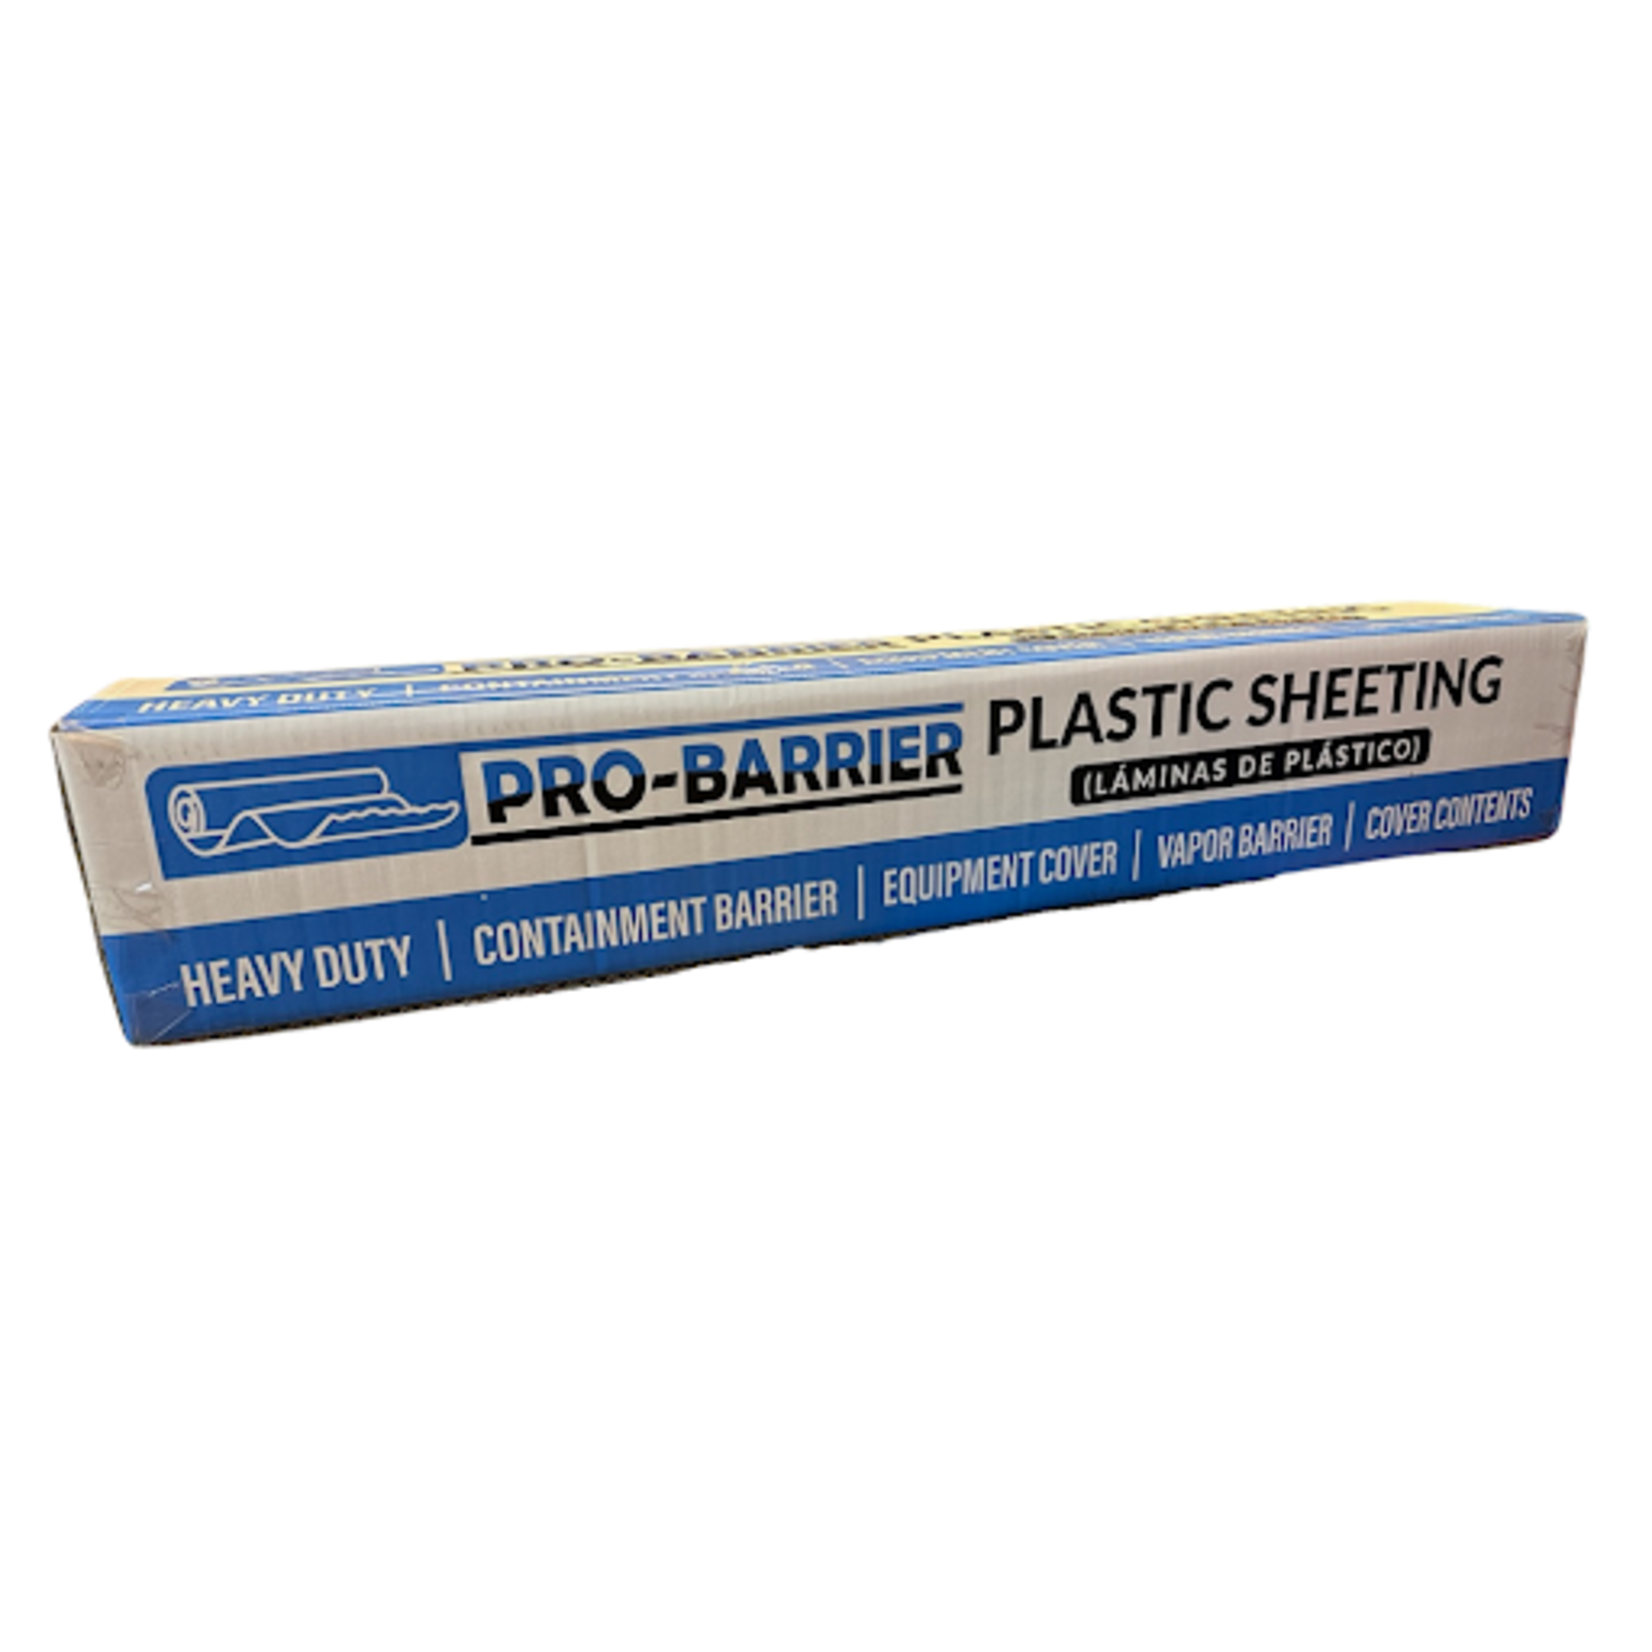 Pro-Barrier Pro-Barrier Plastic Sheeting 6 MIL 10'x100' Black